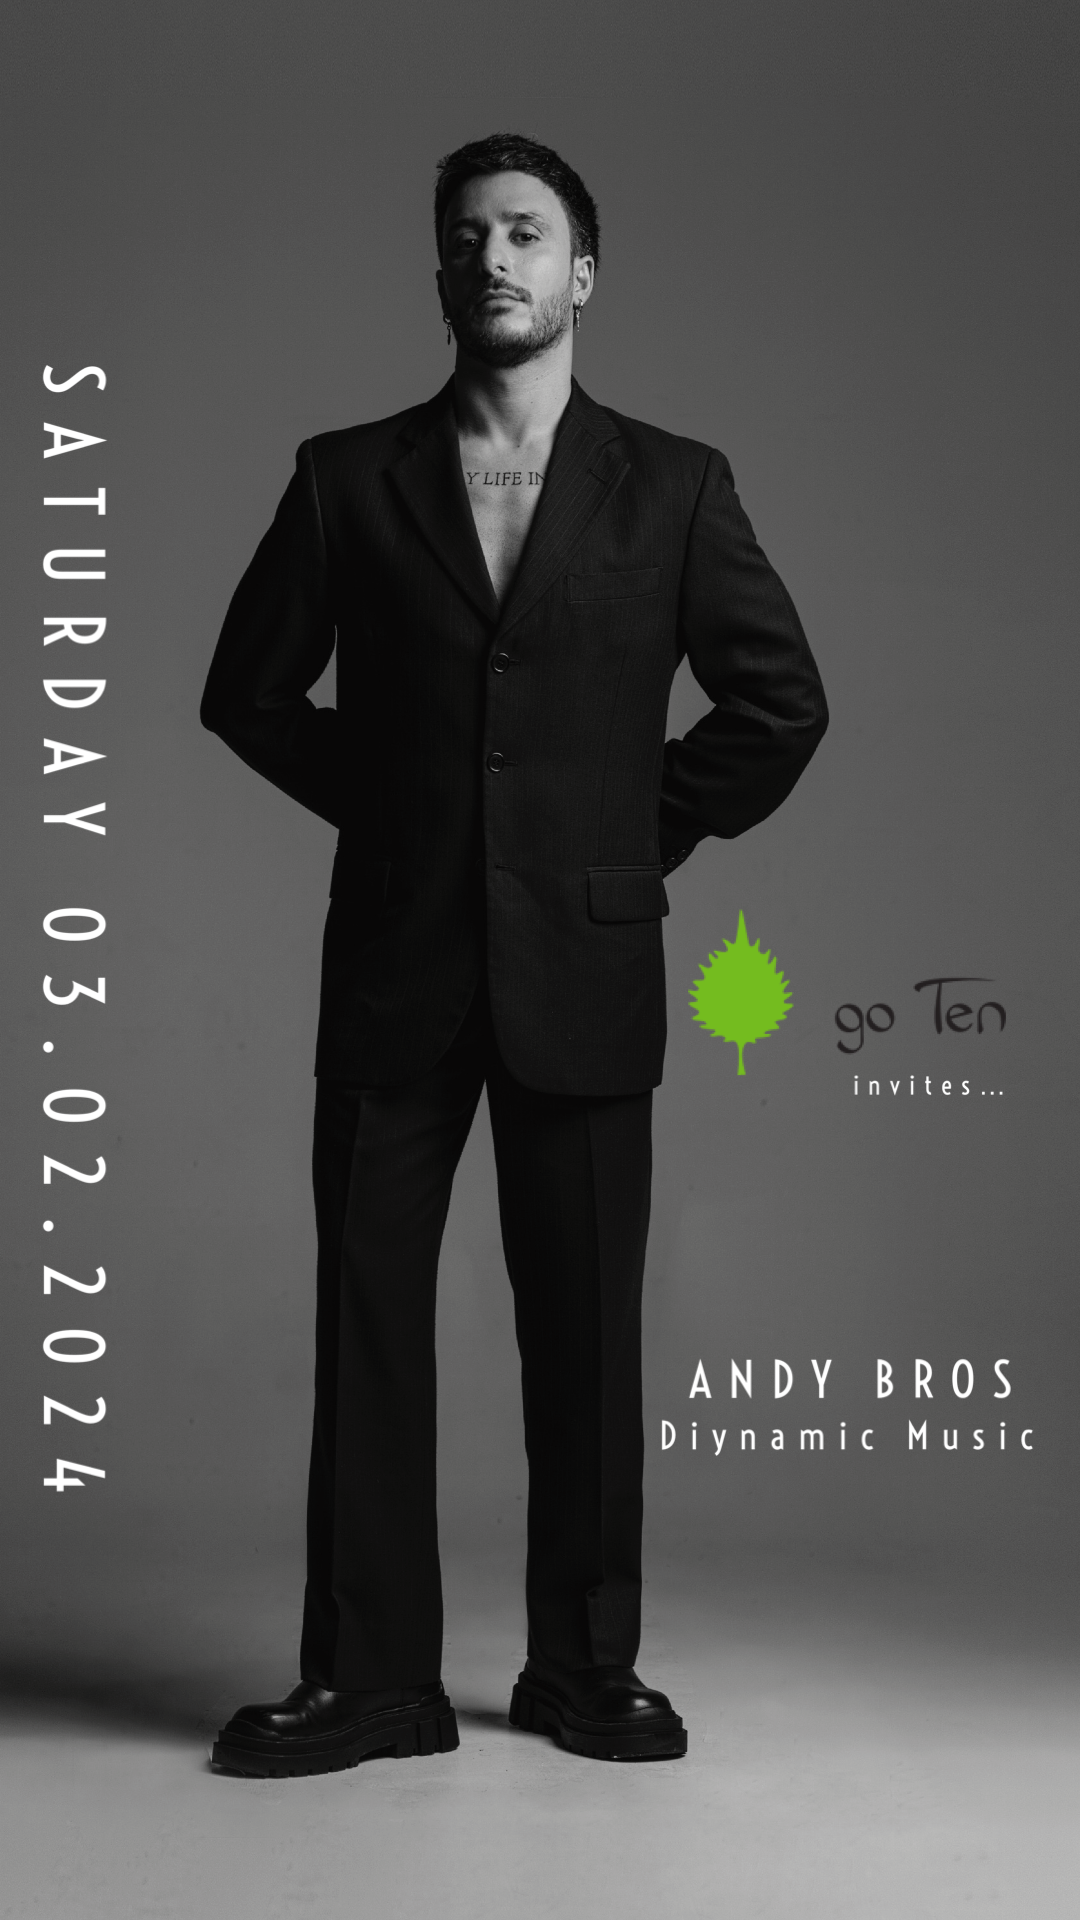 Go Ten invites … Andy Bros - フライヤー表